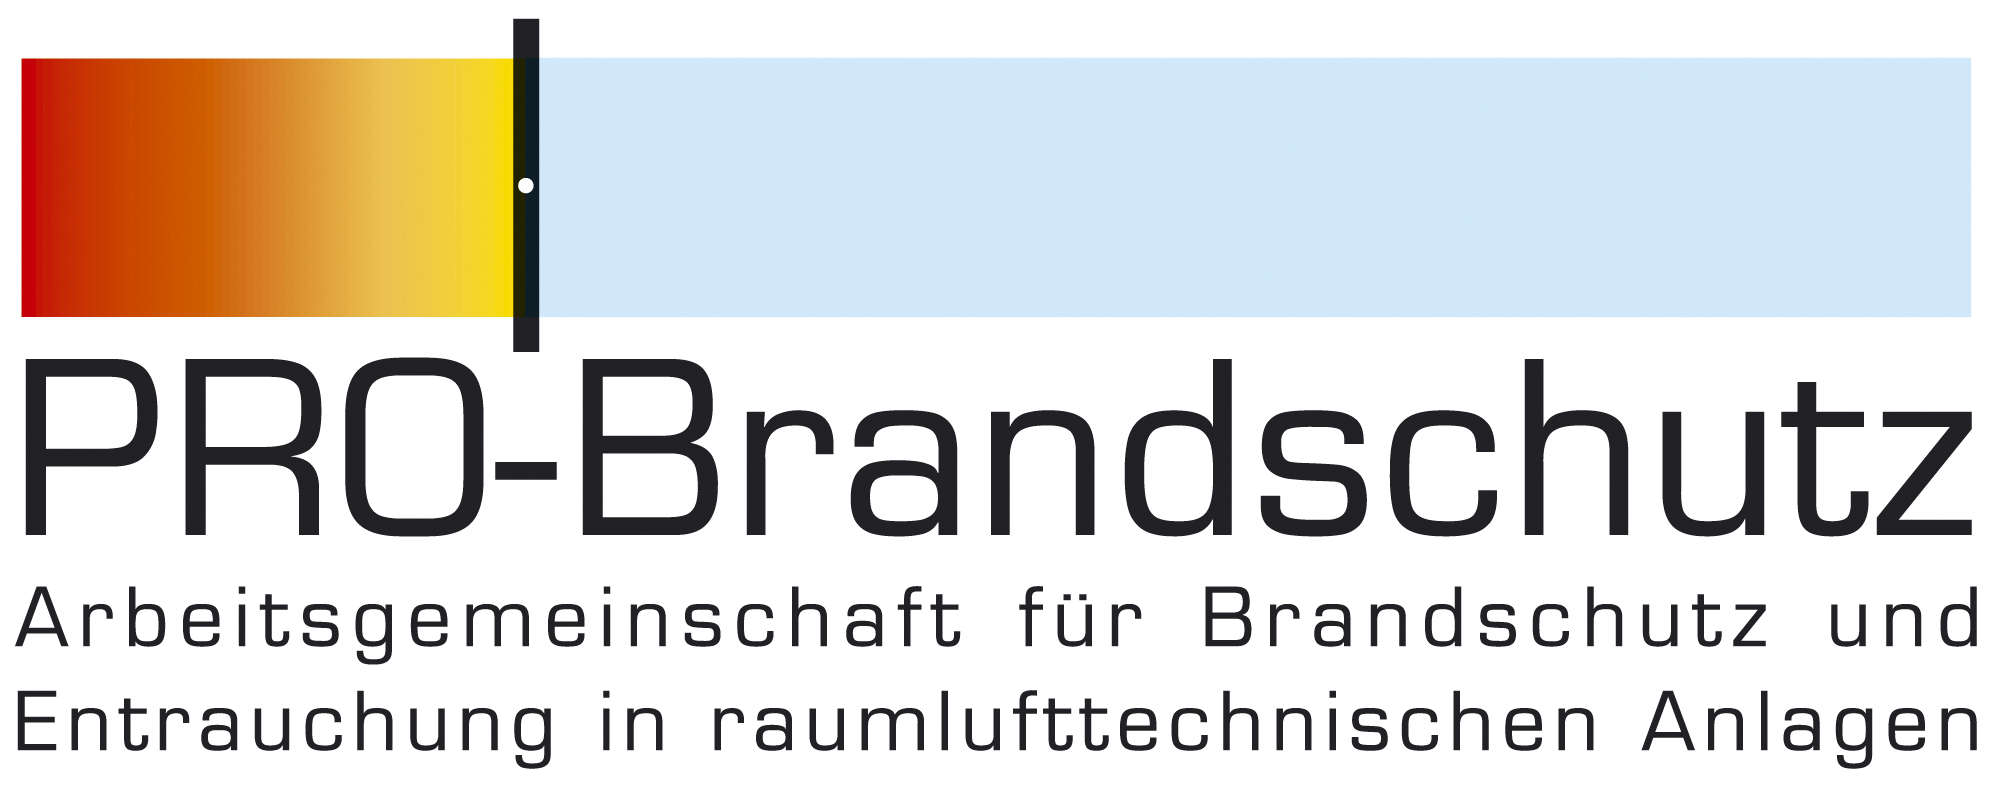 PRO-Brandschutz (PRO fire protection)